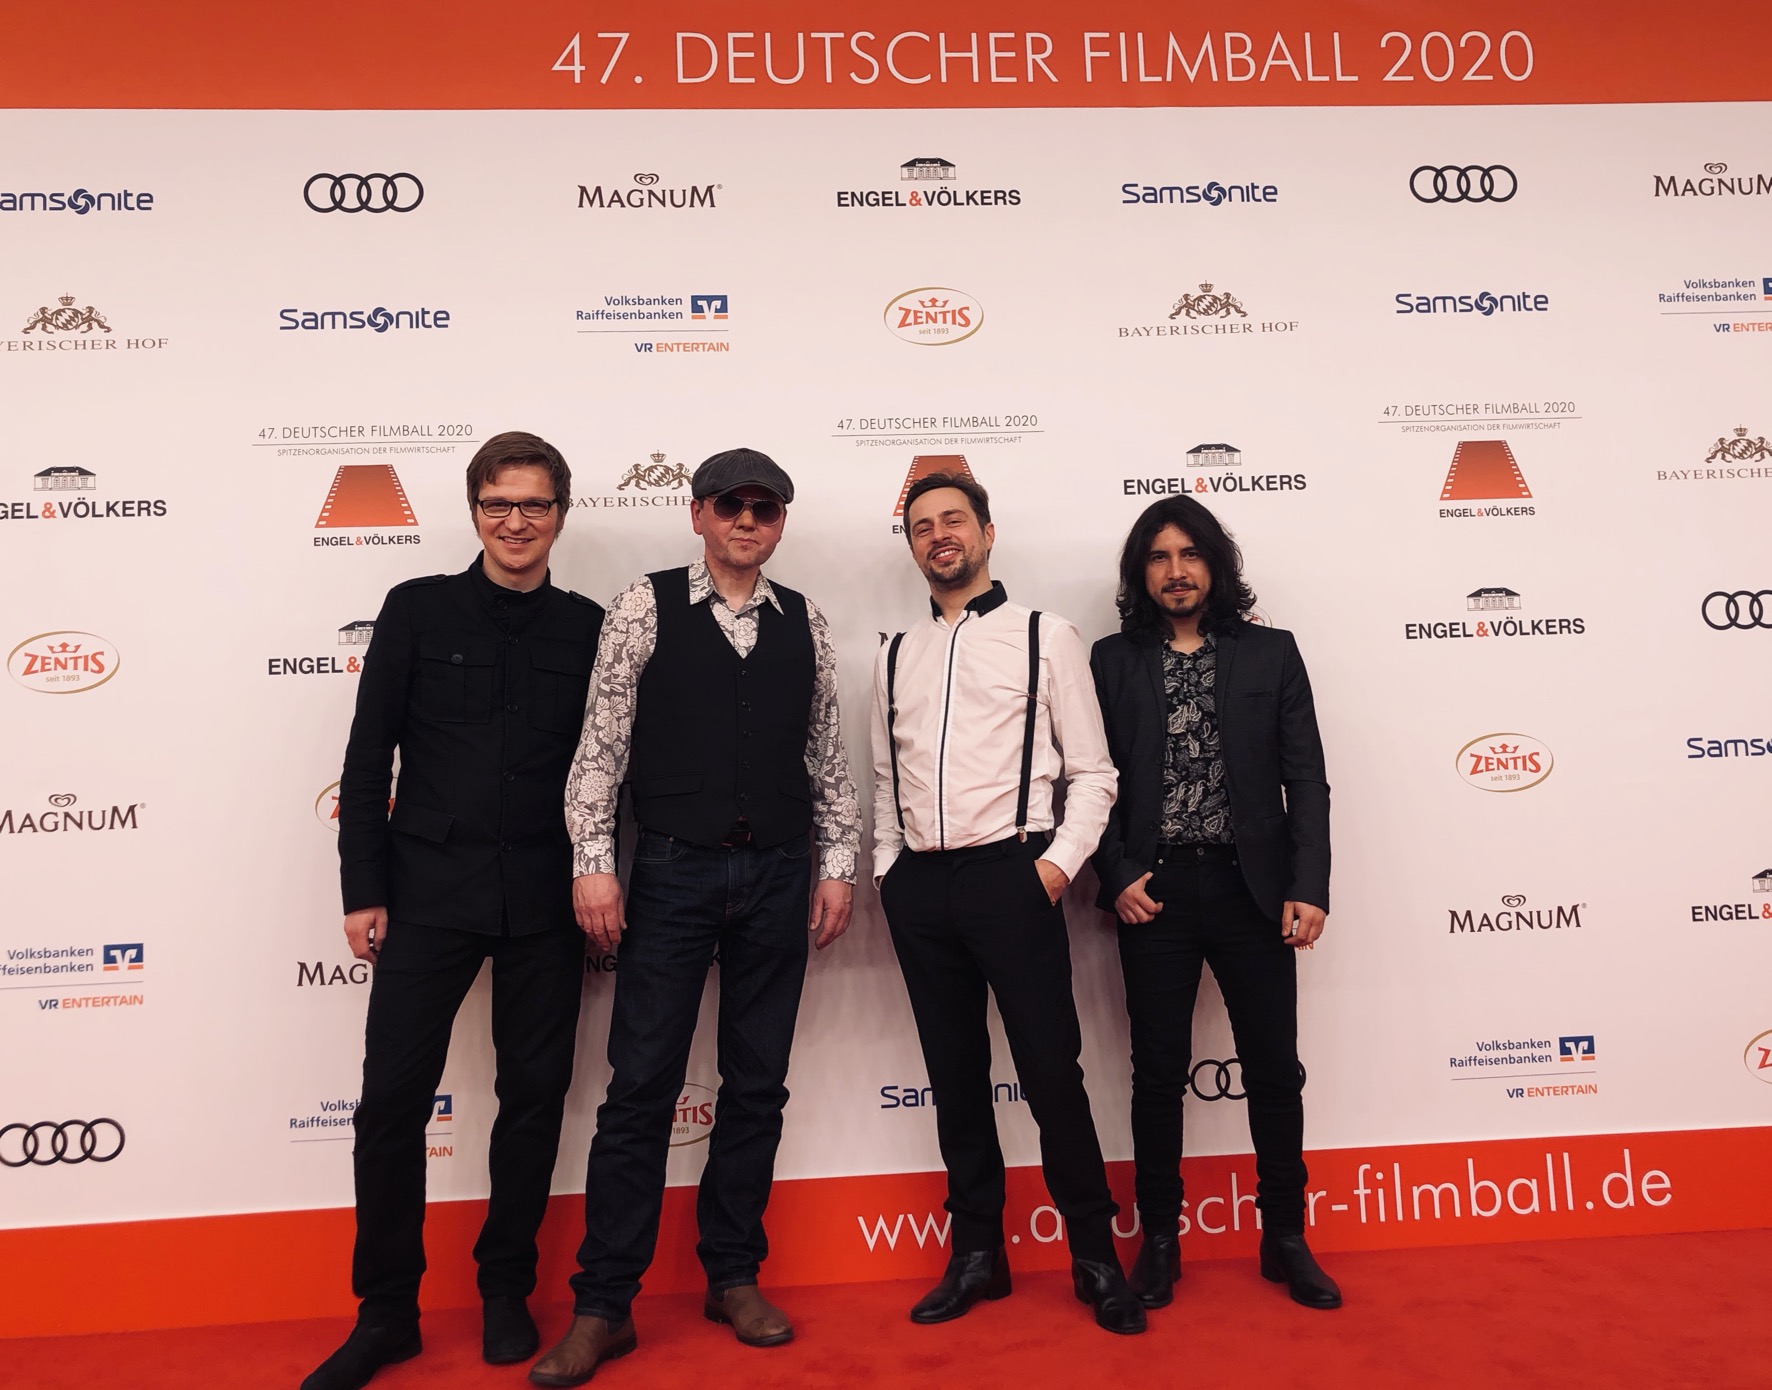 Filmball 2020 München